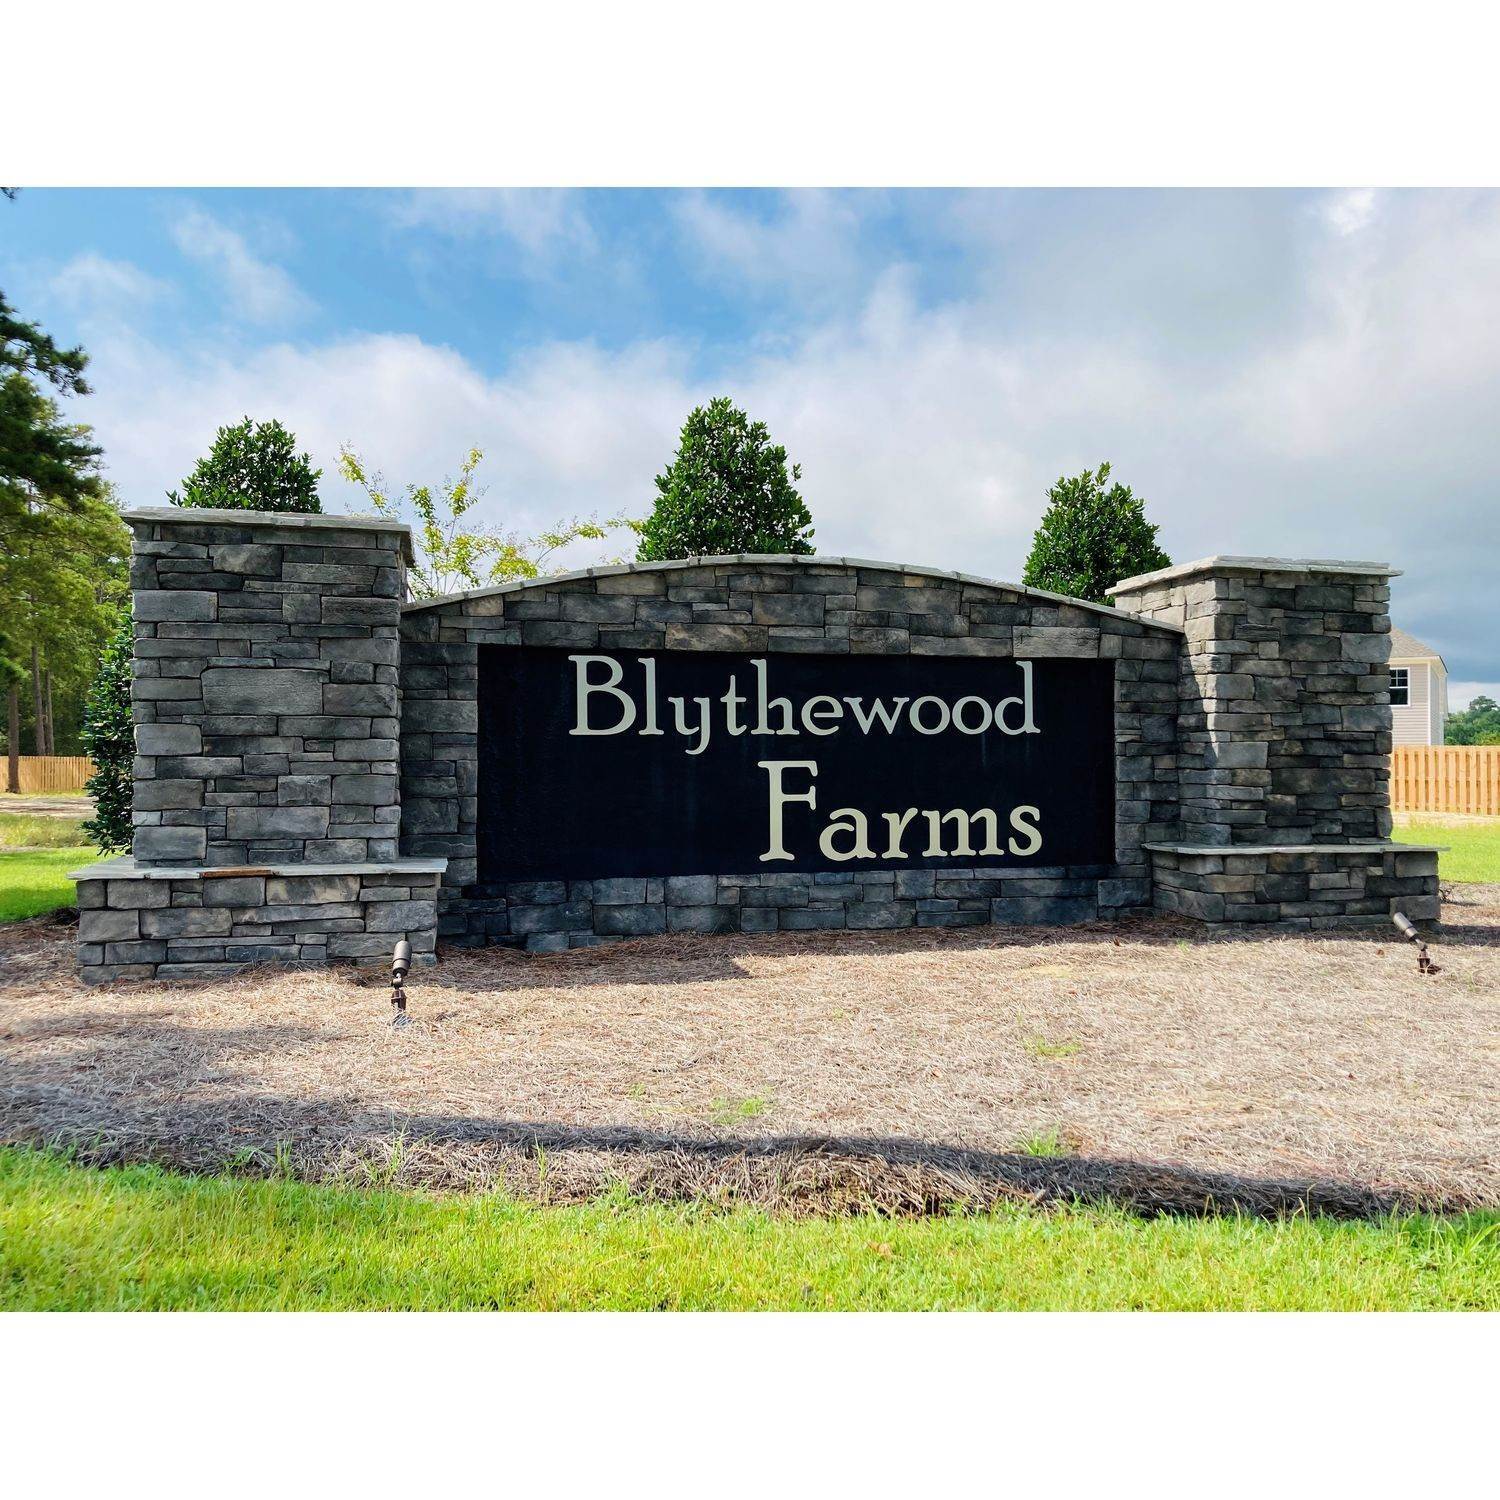 2. Blythewood Farms edificio a 1104 Deep Creek Road, Blythewood, SC 29016